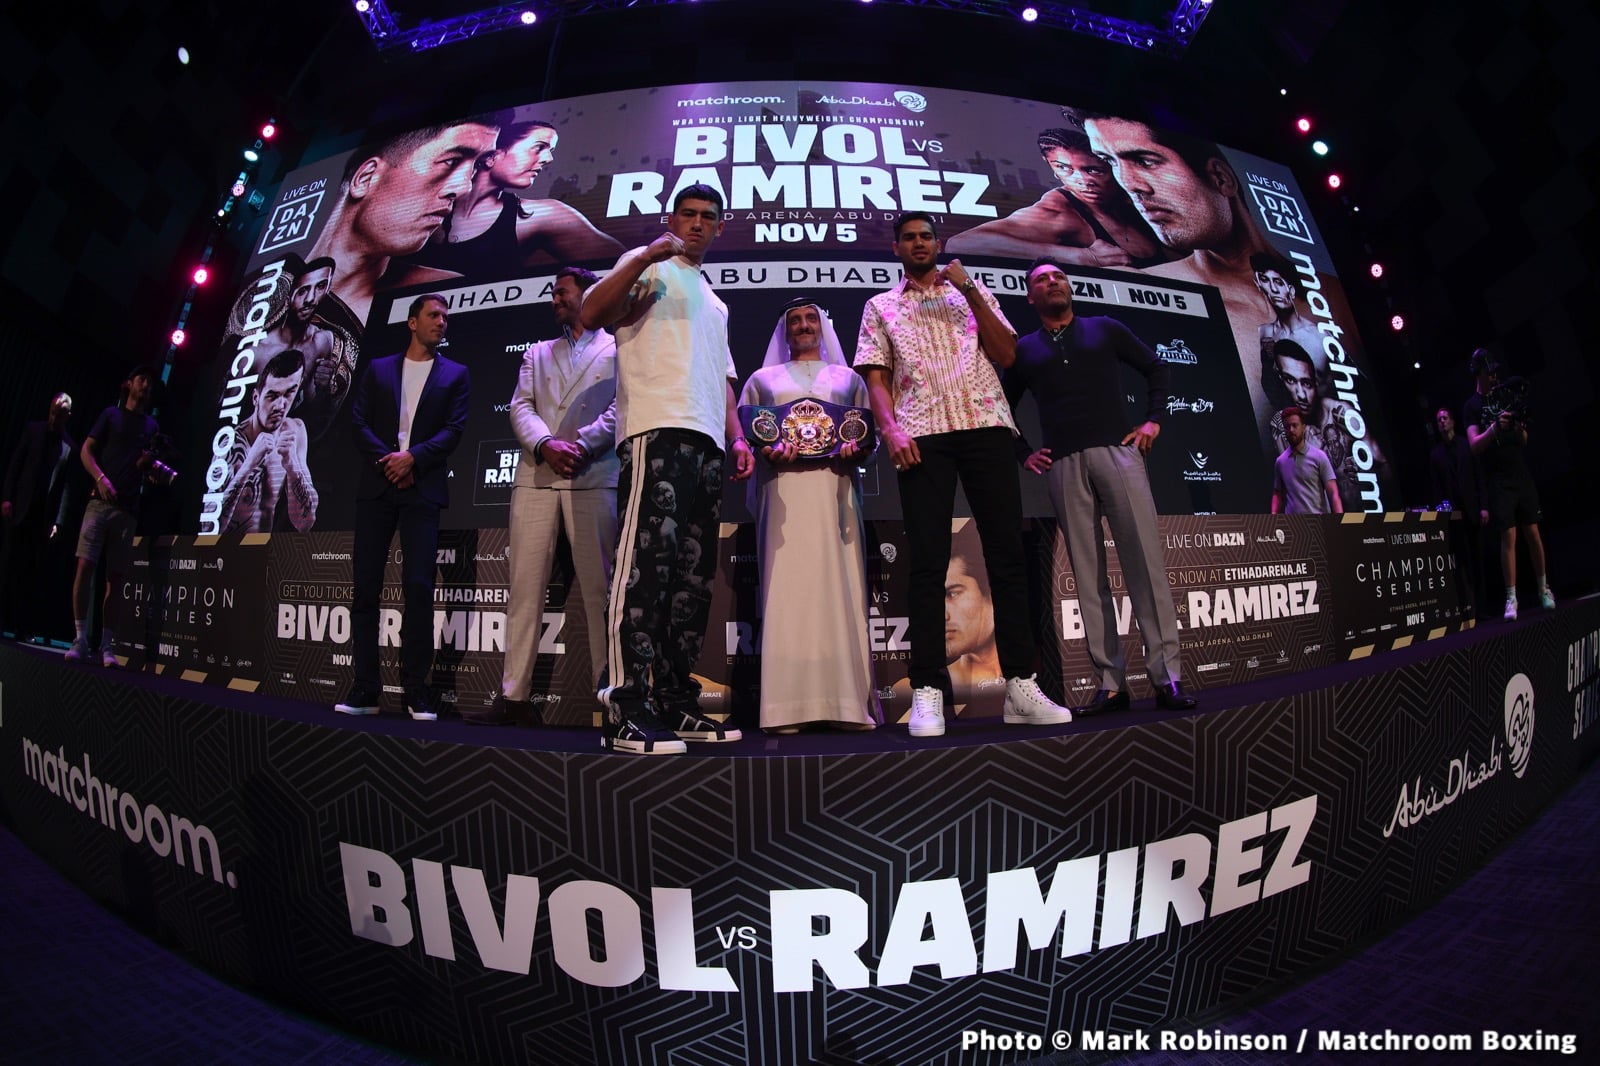 What time is the Bivol vs Ramirez fight tonight?